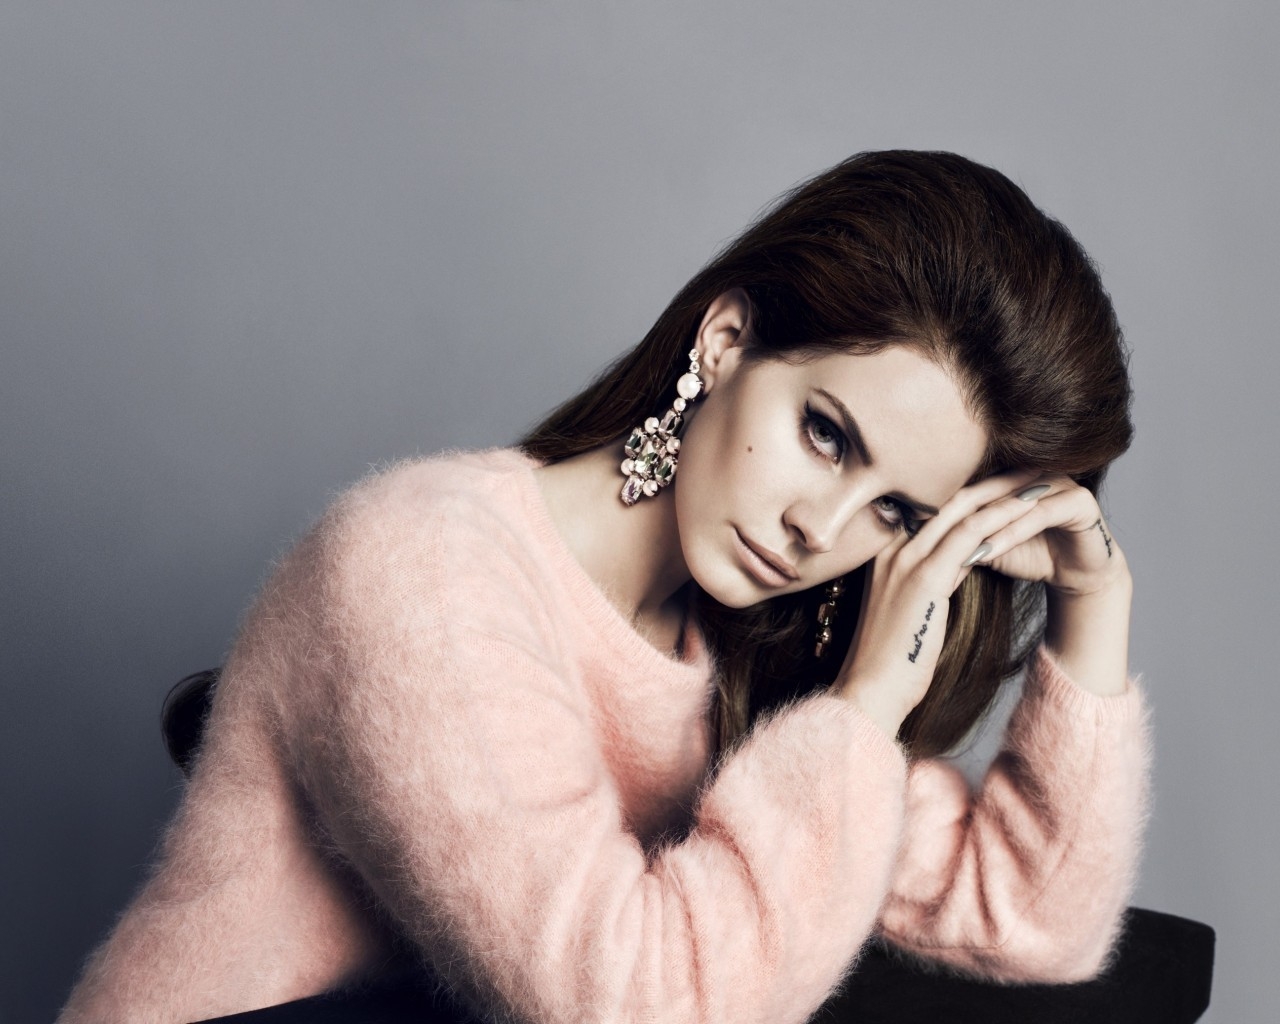 Beautiful Lana Del Rey for 1280 x 1024 resolution